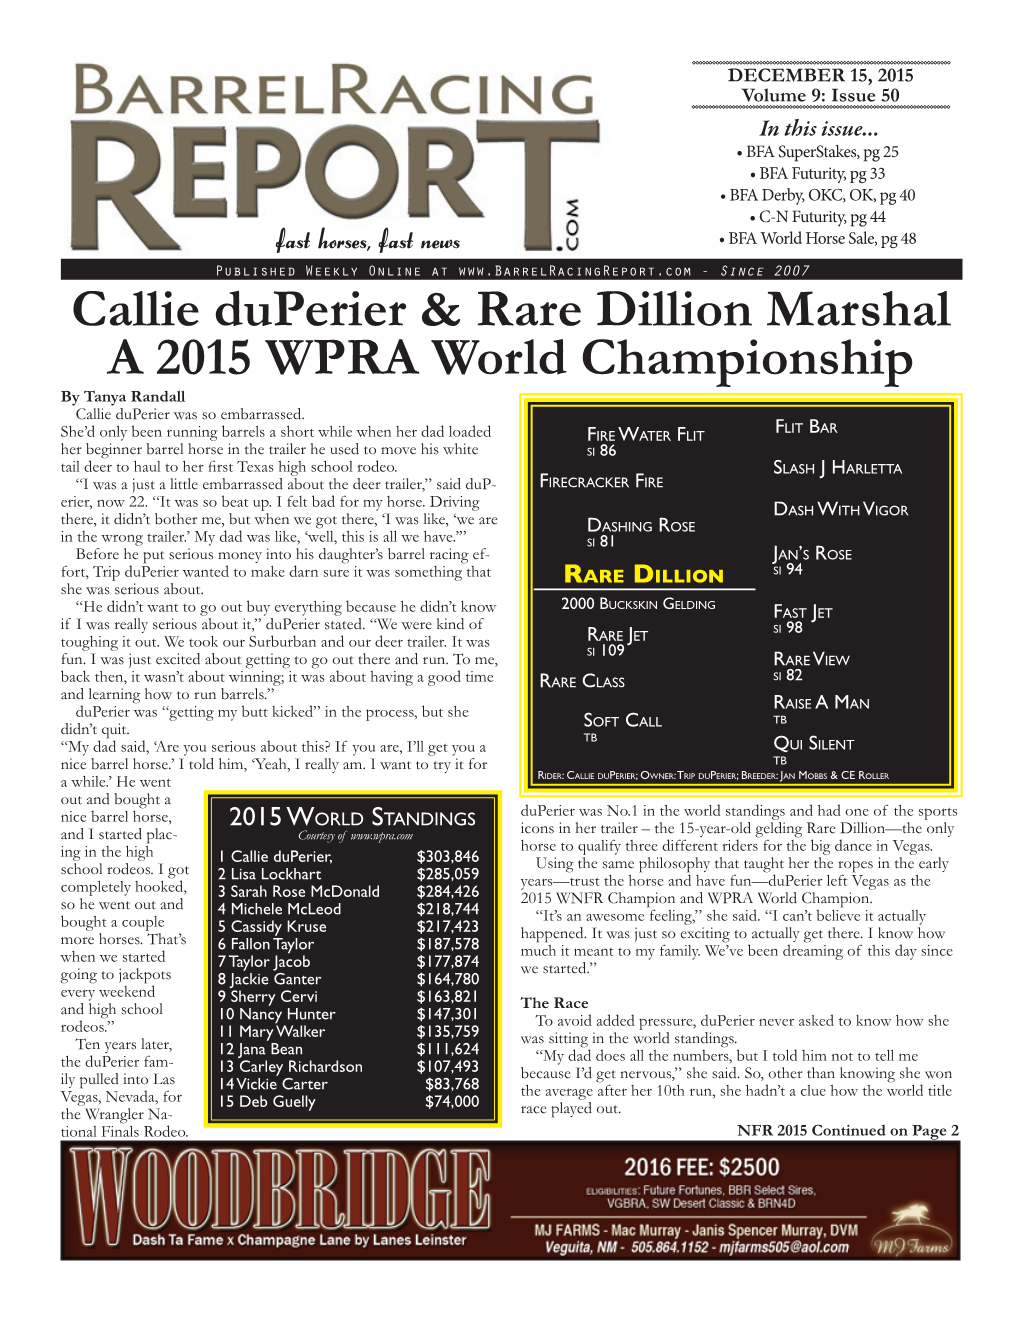 Callie Duperier & Rare Dillion Marshal a 2015 Wpra World Championship